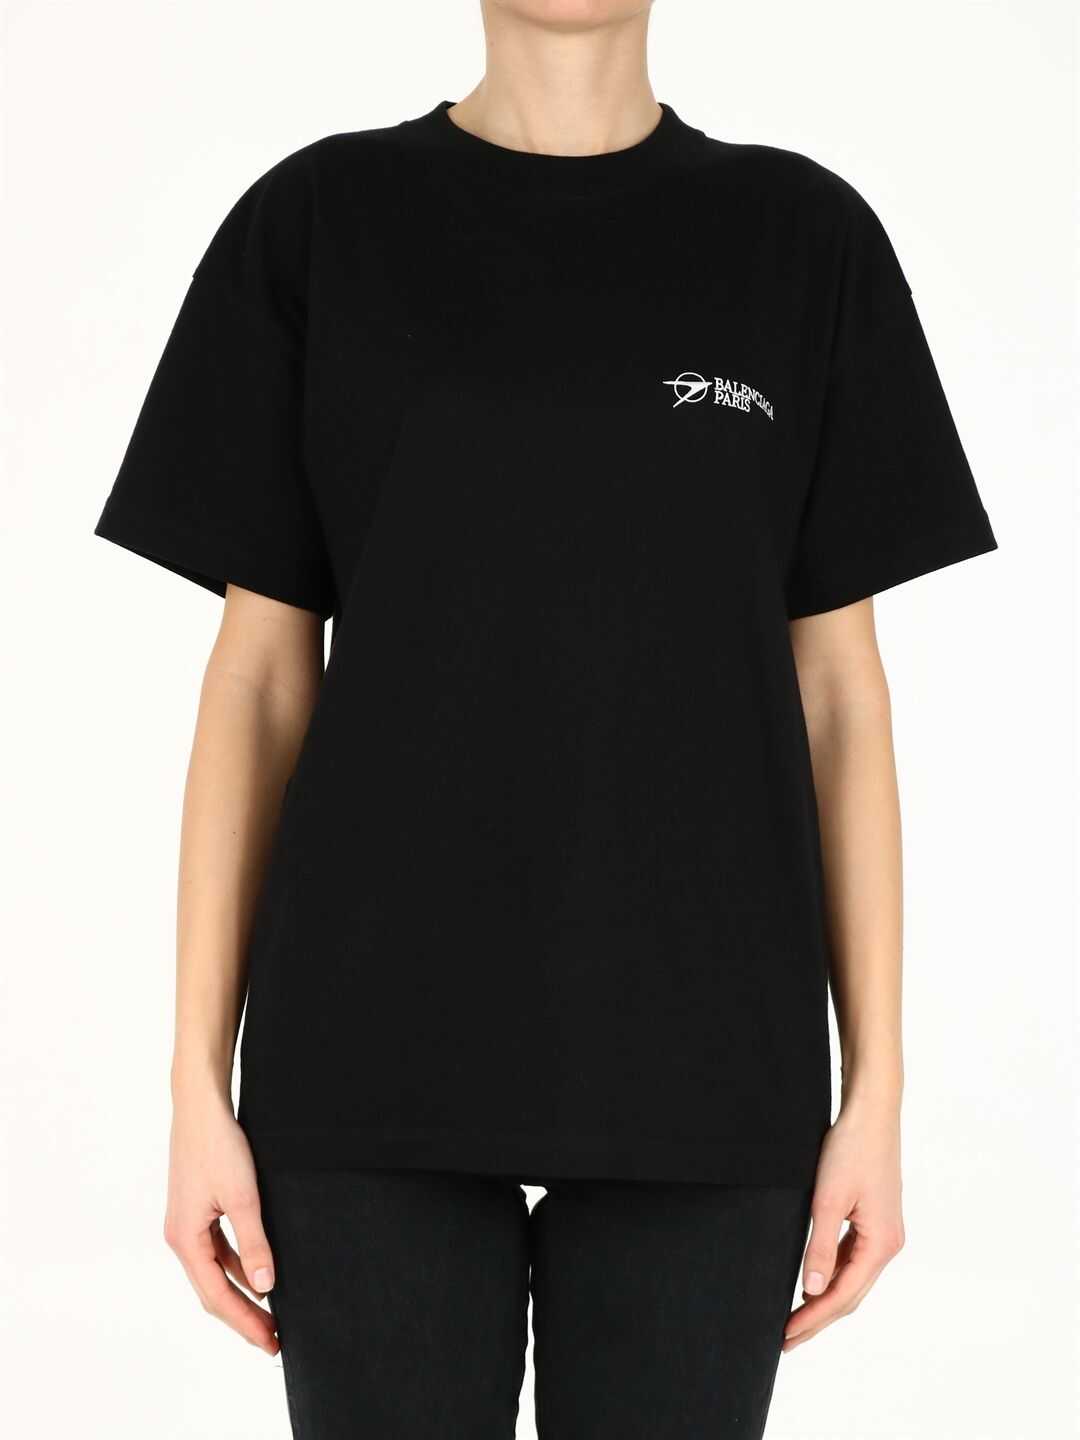 Balenciaga Logo T-Shirt 612965 TKV86 Black